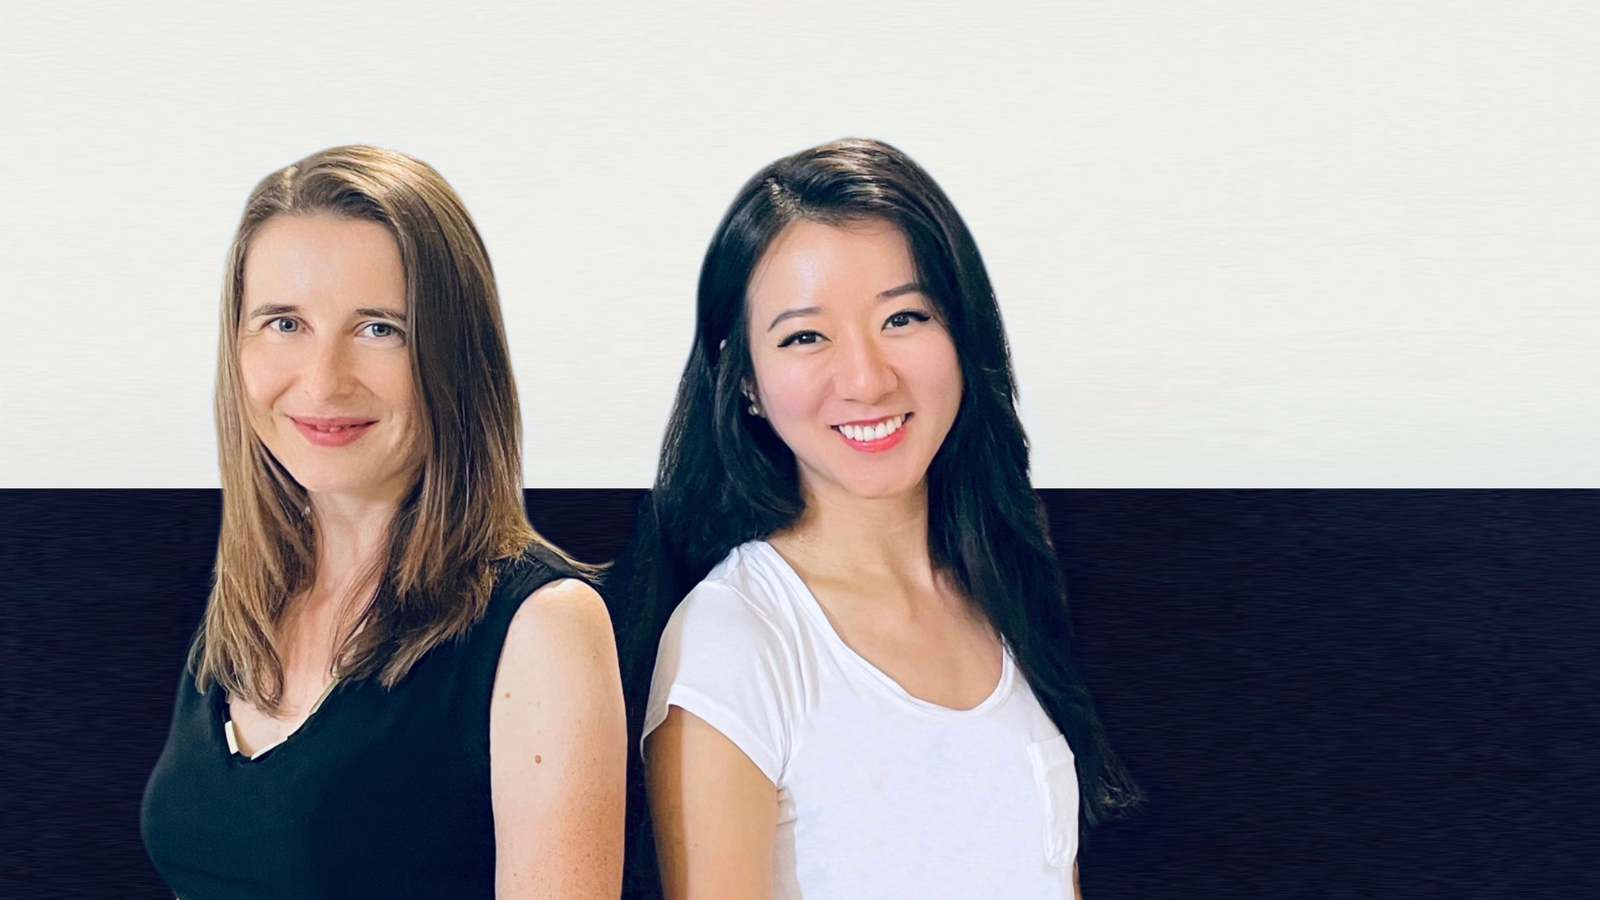 Blaze co-founders Nanxi Liu and Tina Denuit-Wojcik pose together for a photo.